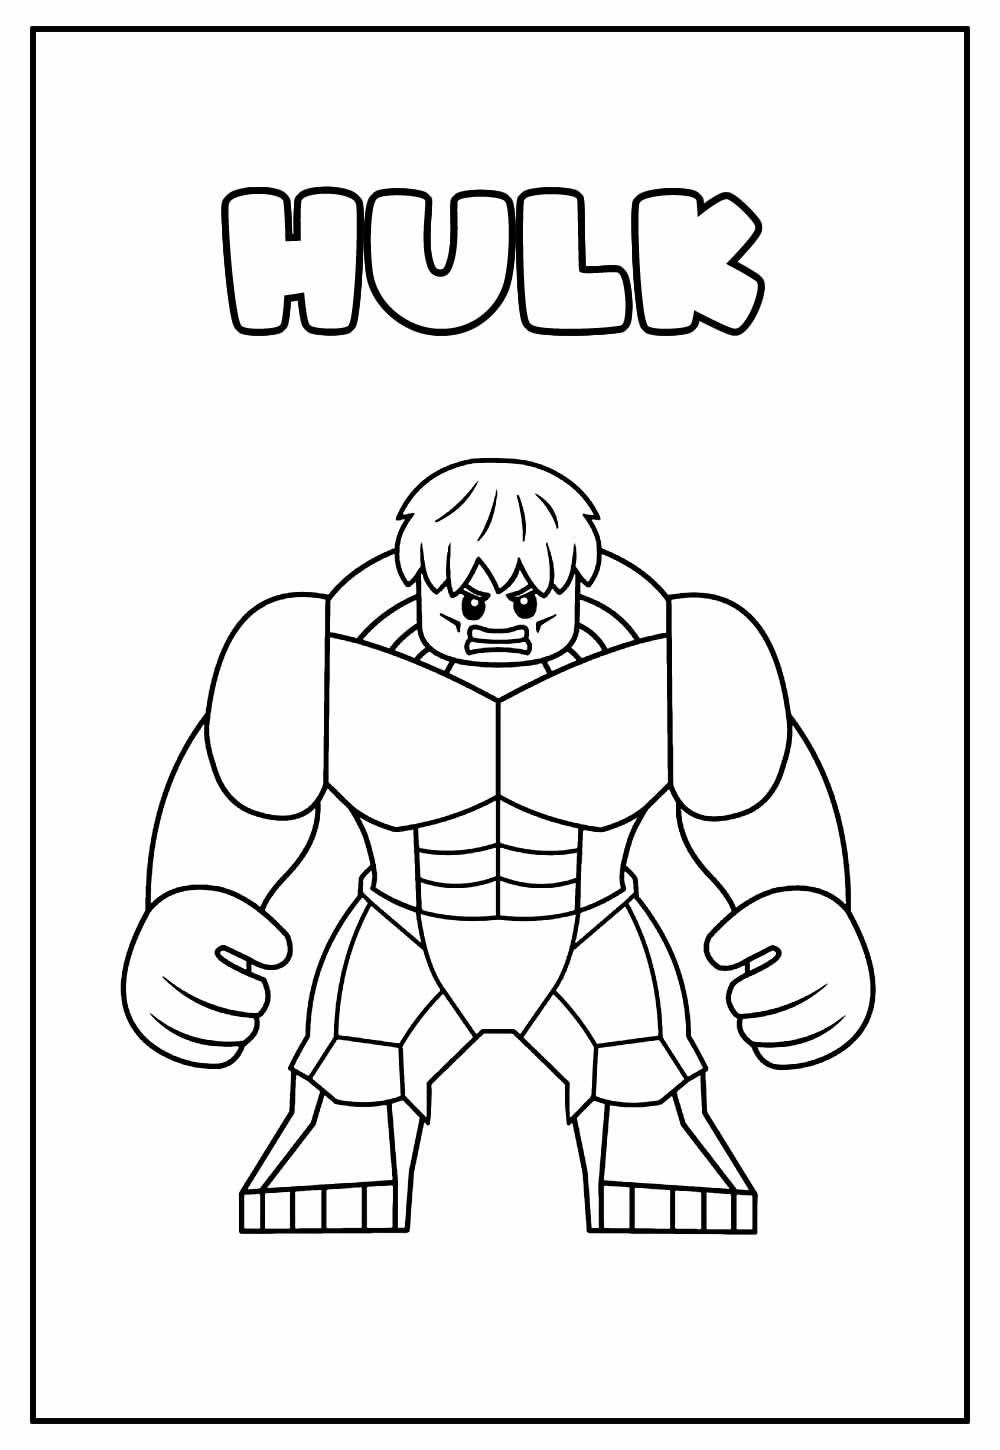 Desenho Educativo de Hulk para colorir